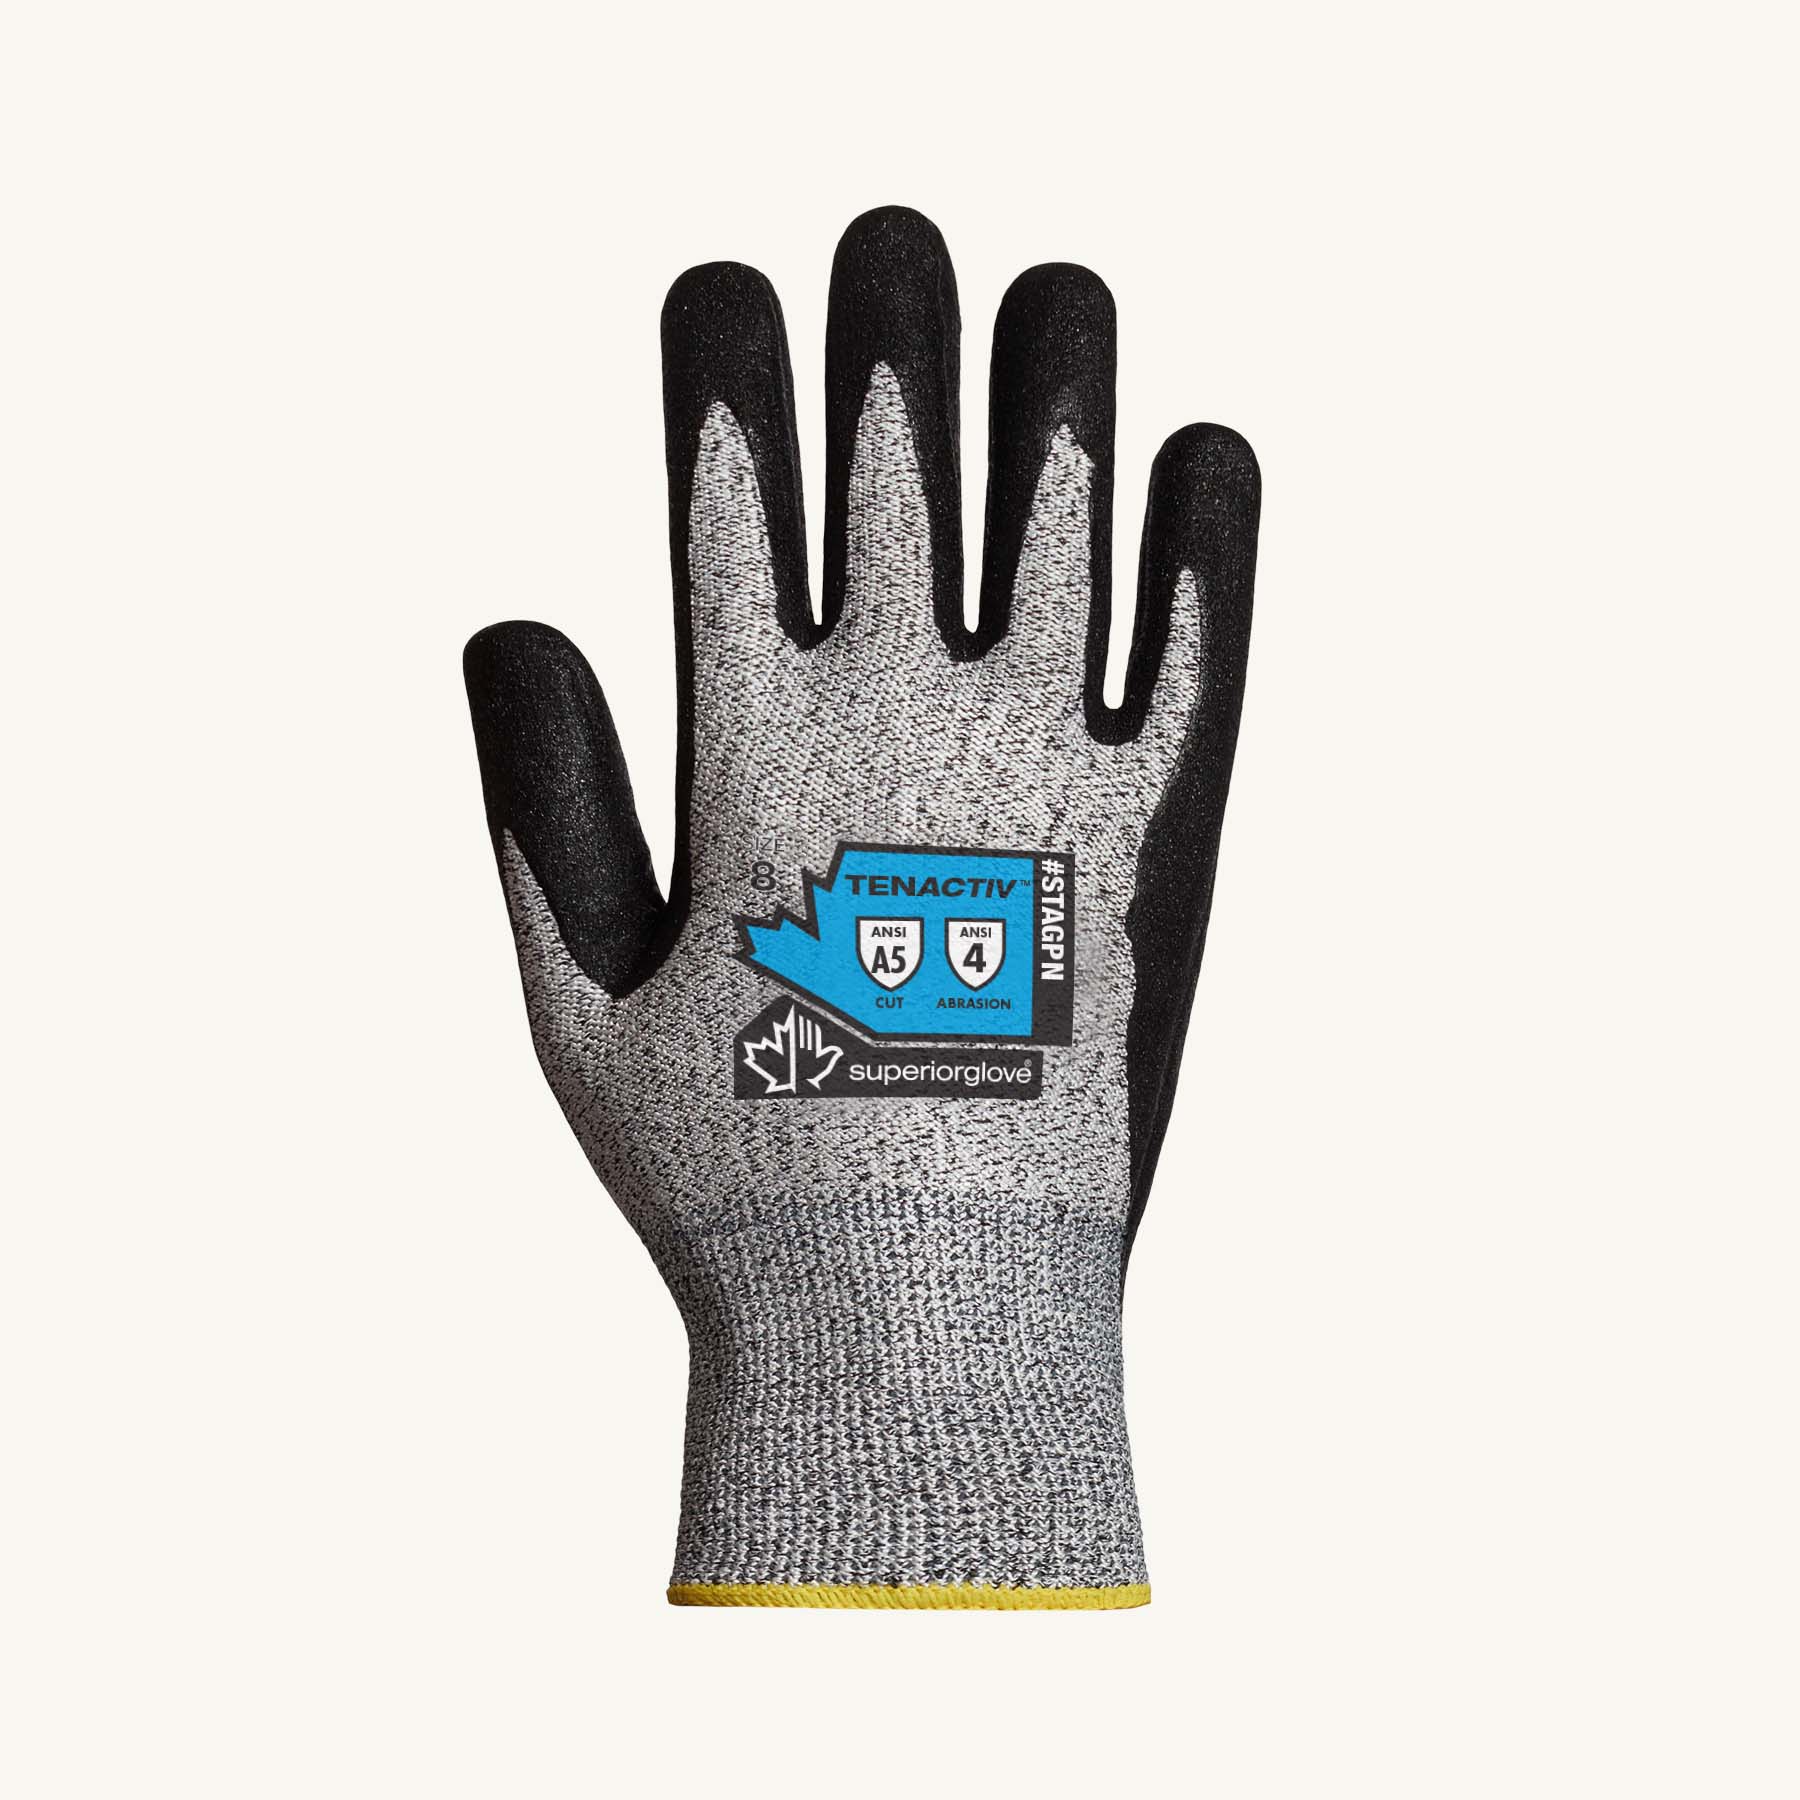 TenActiv™ STAGPN - Superior Glove